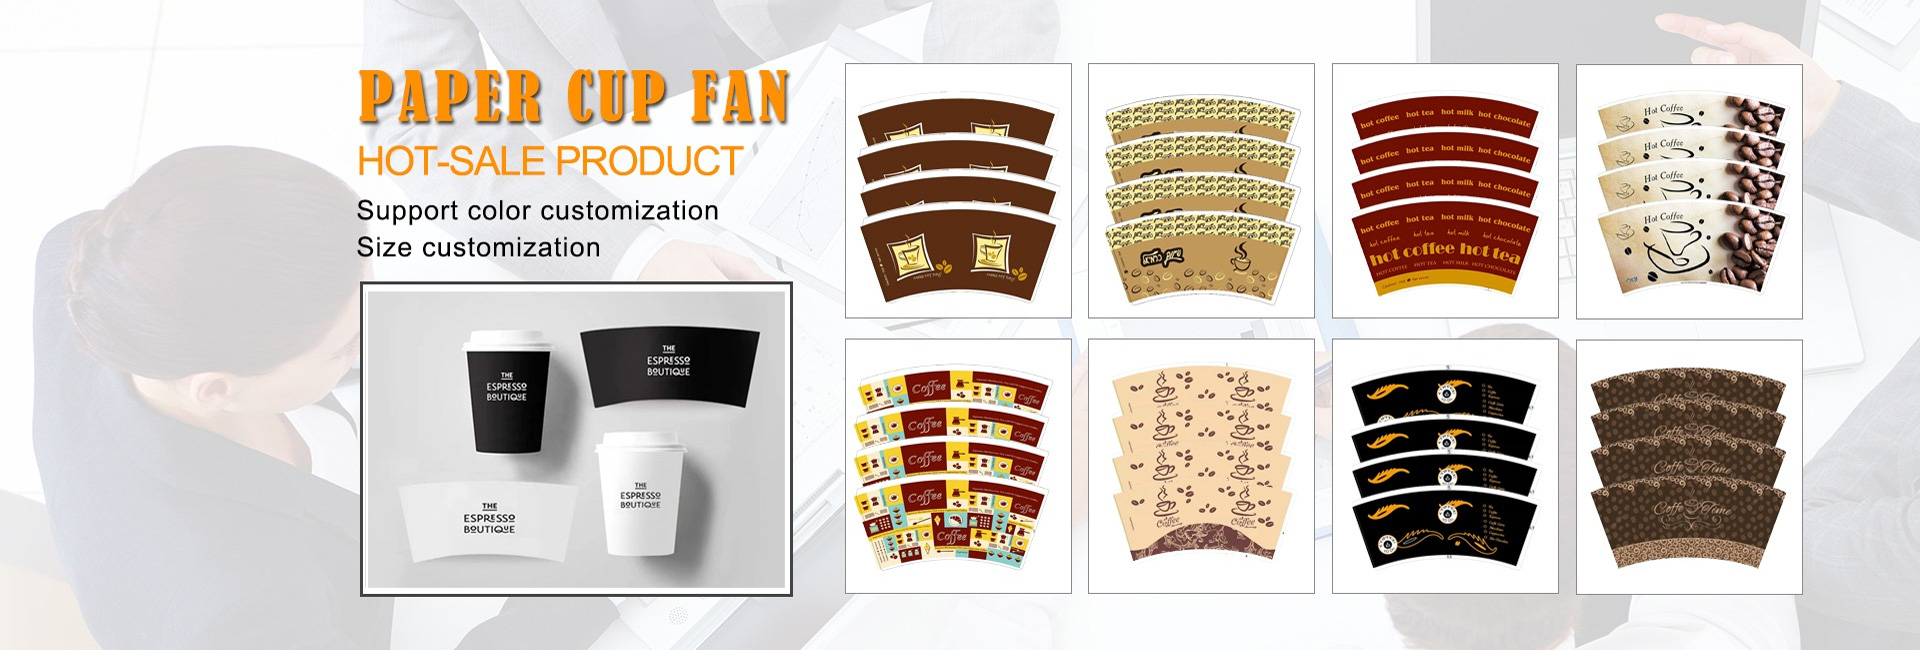 Henan Dahang Packaging Co., Ltd.